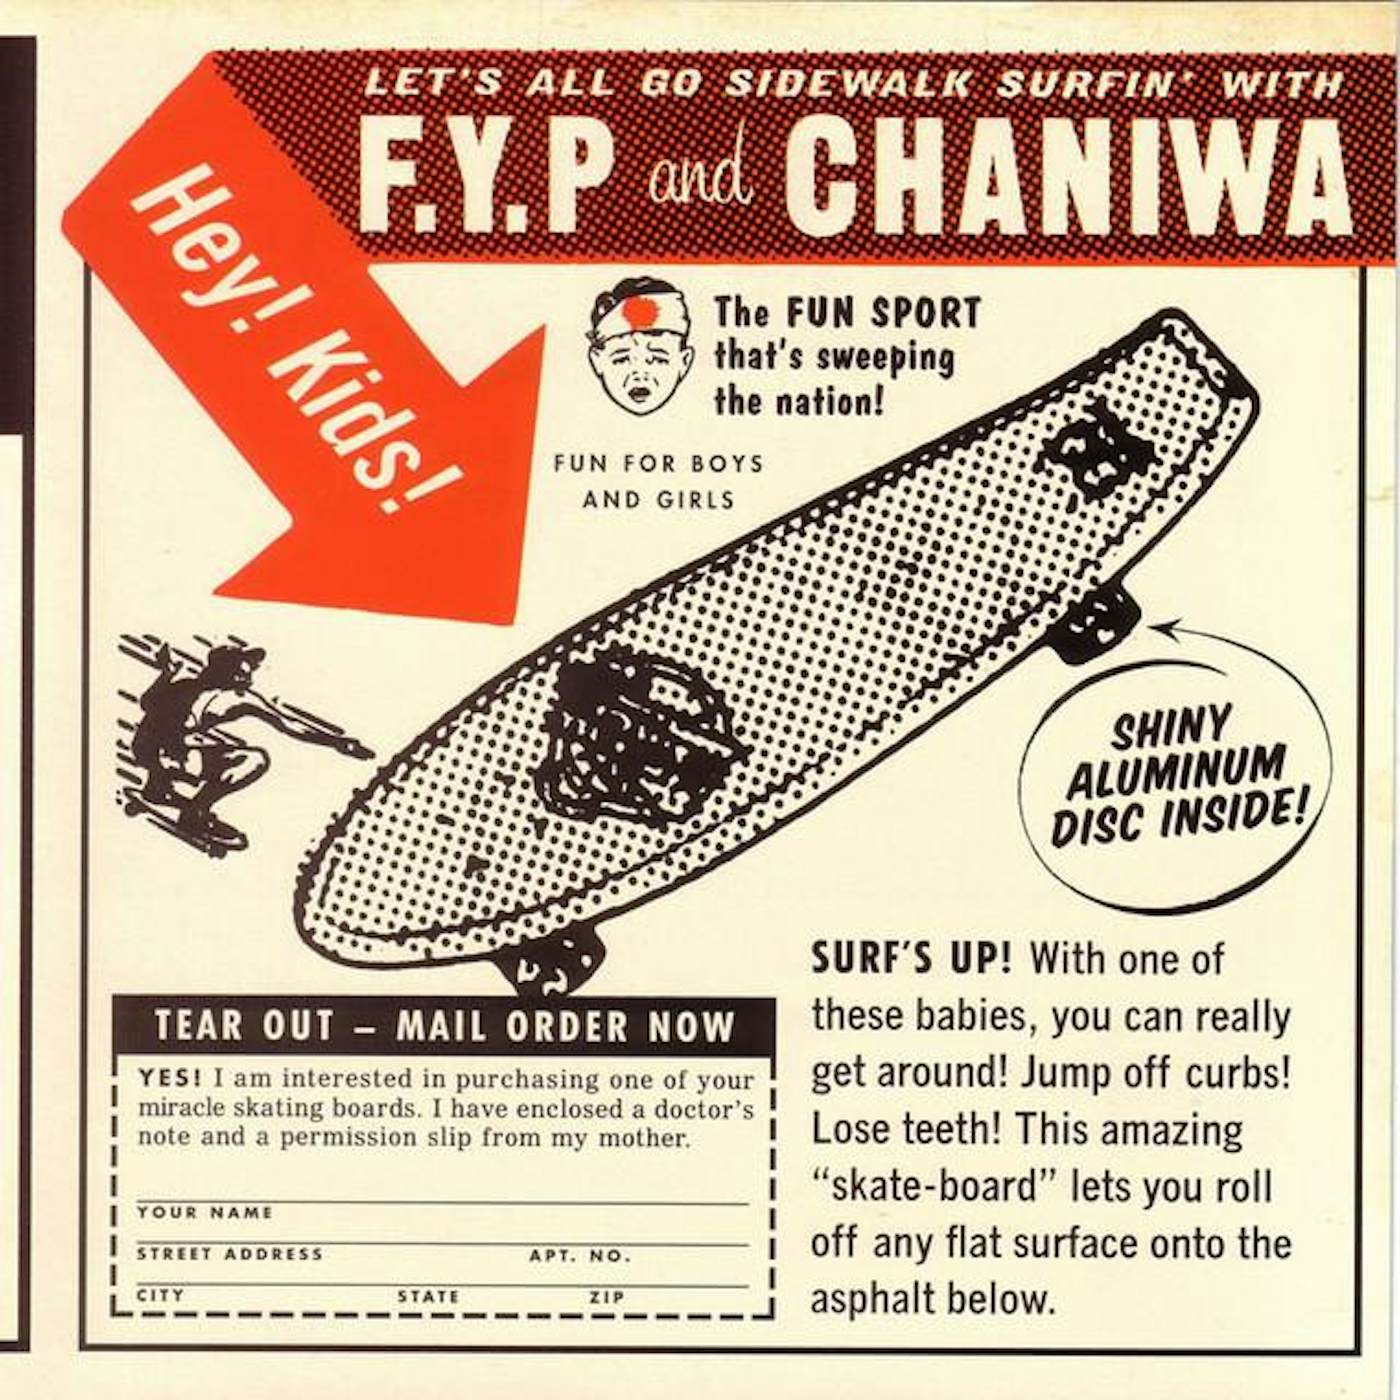 F.Y.P and Chaniwa